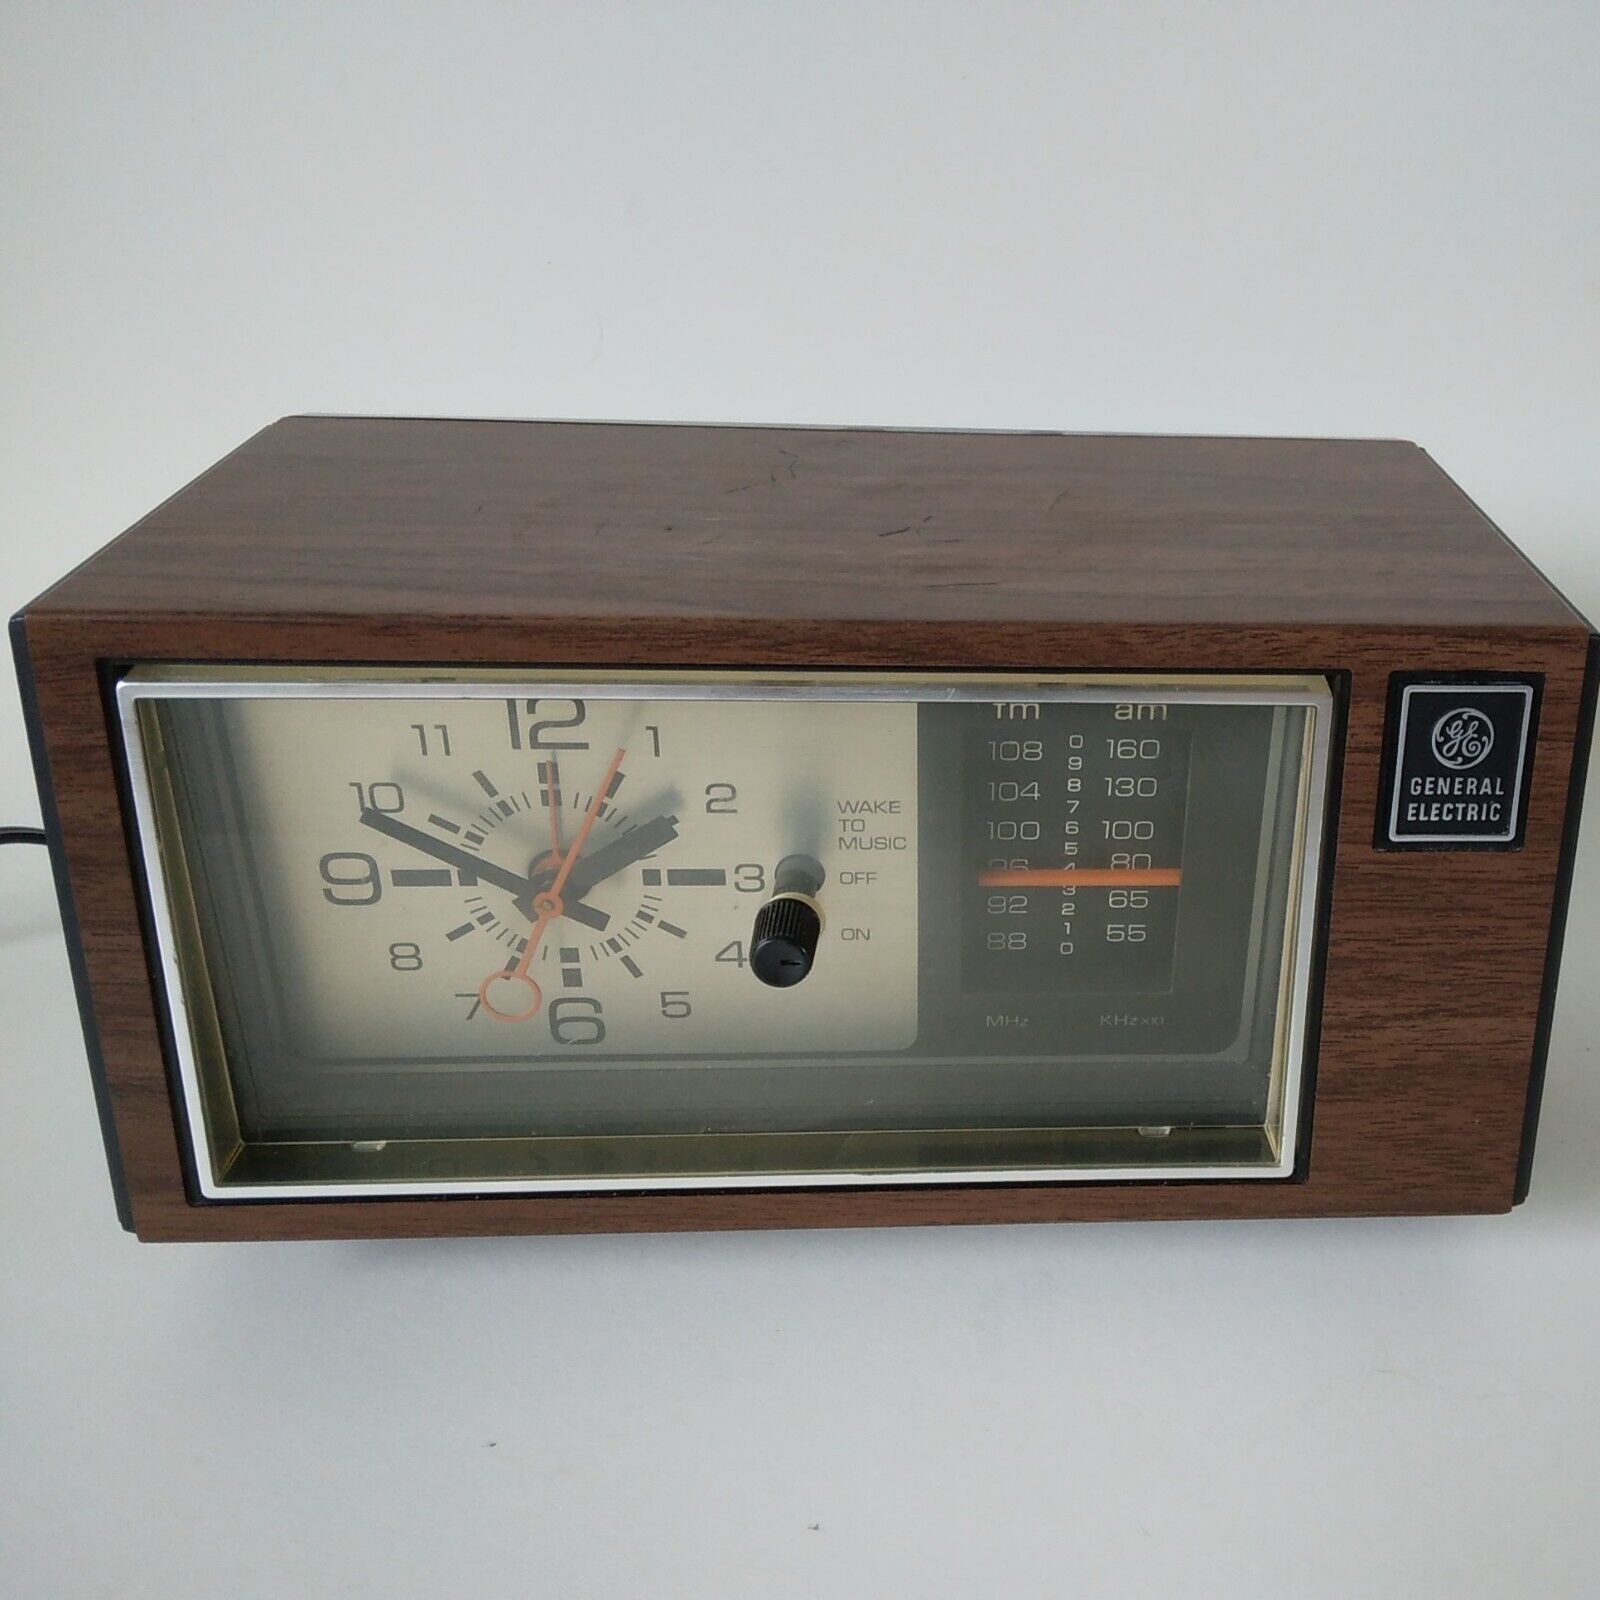 GE 7-4550C Analog Radio Alarm Clock-AM/FM-Vintage 1981-Tested/Works